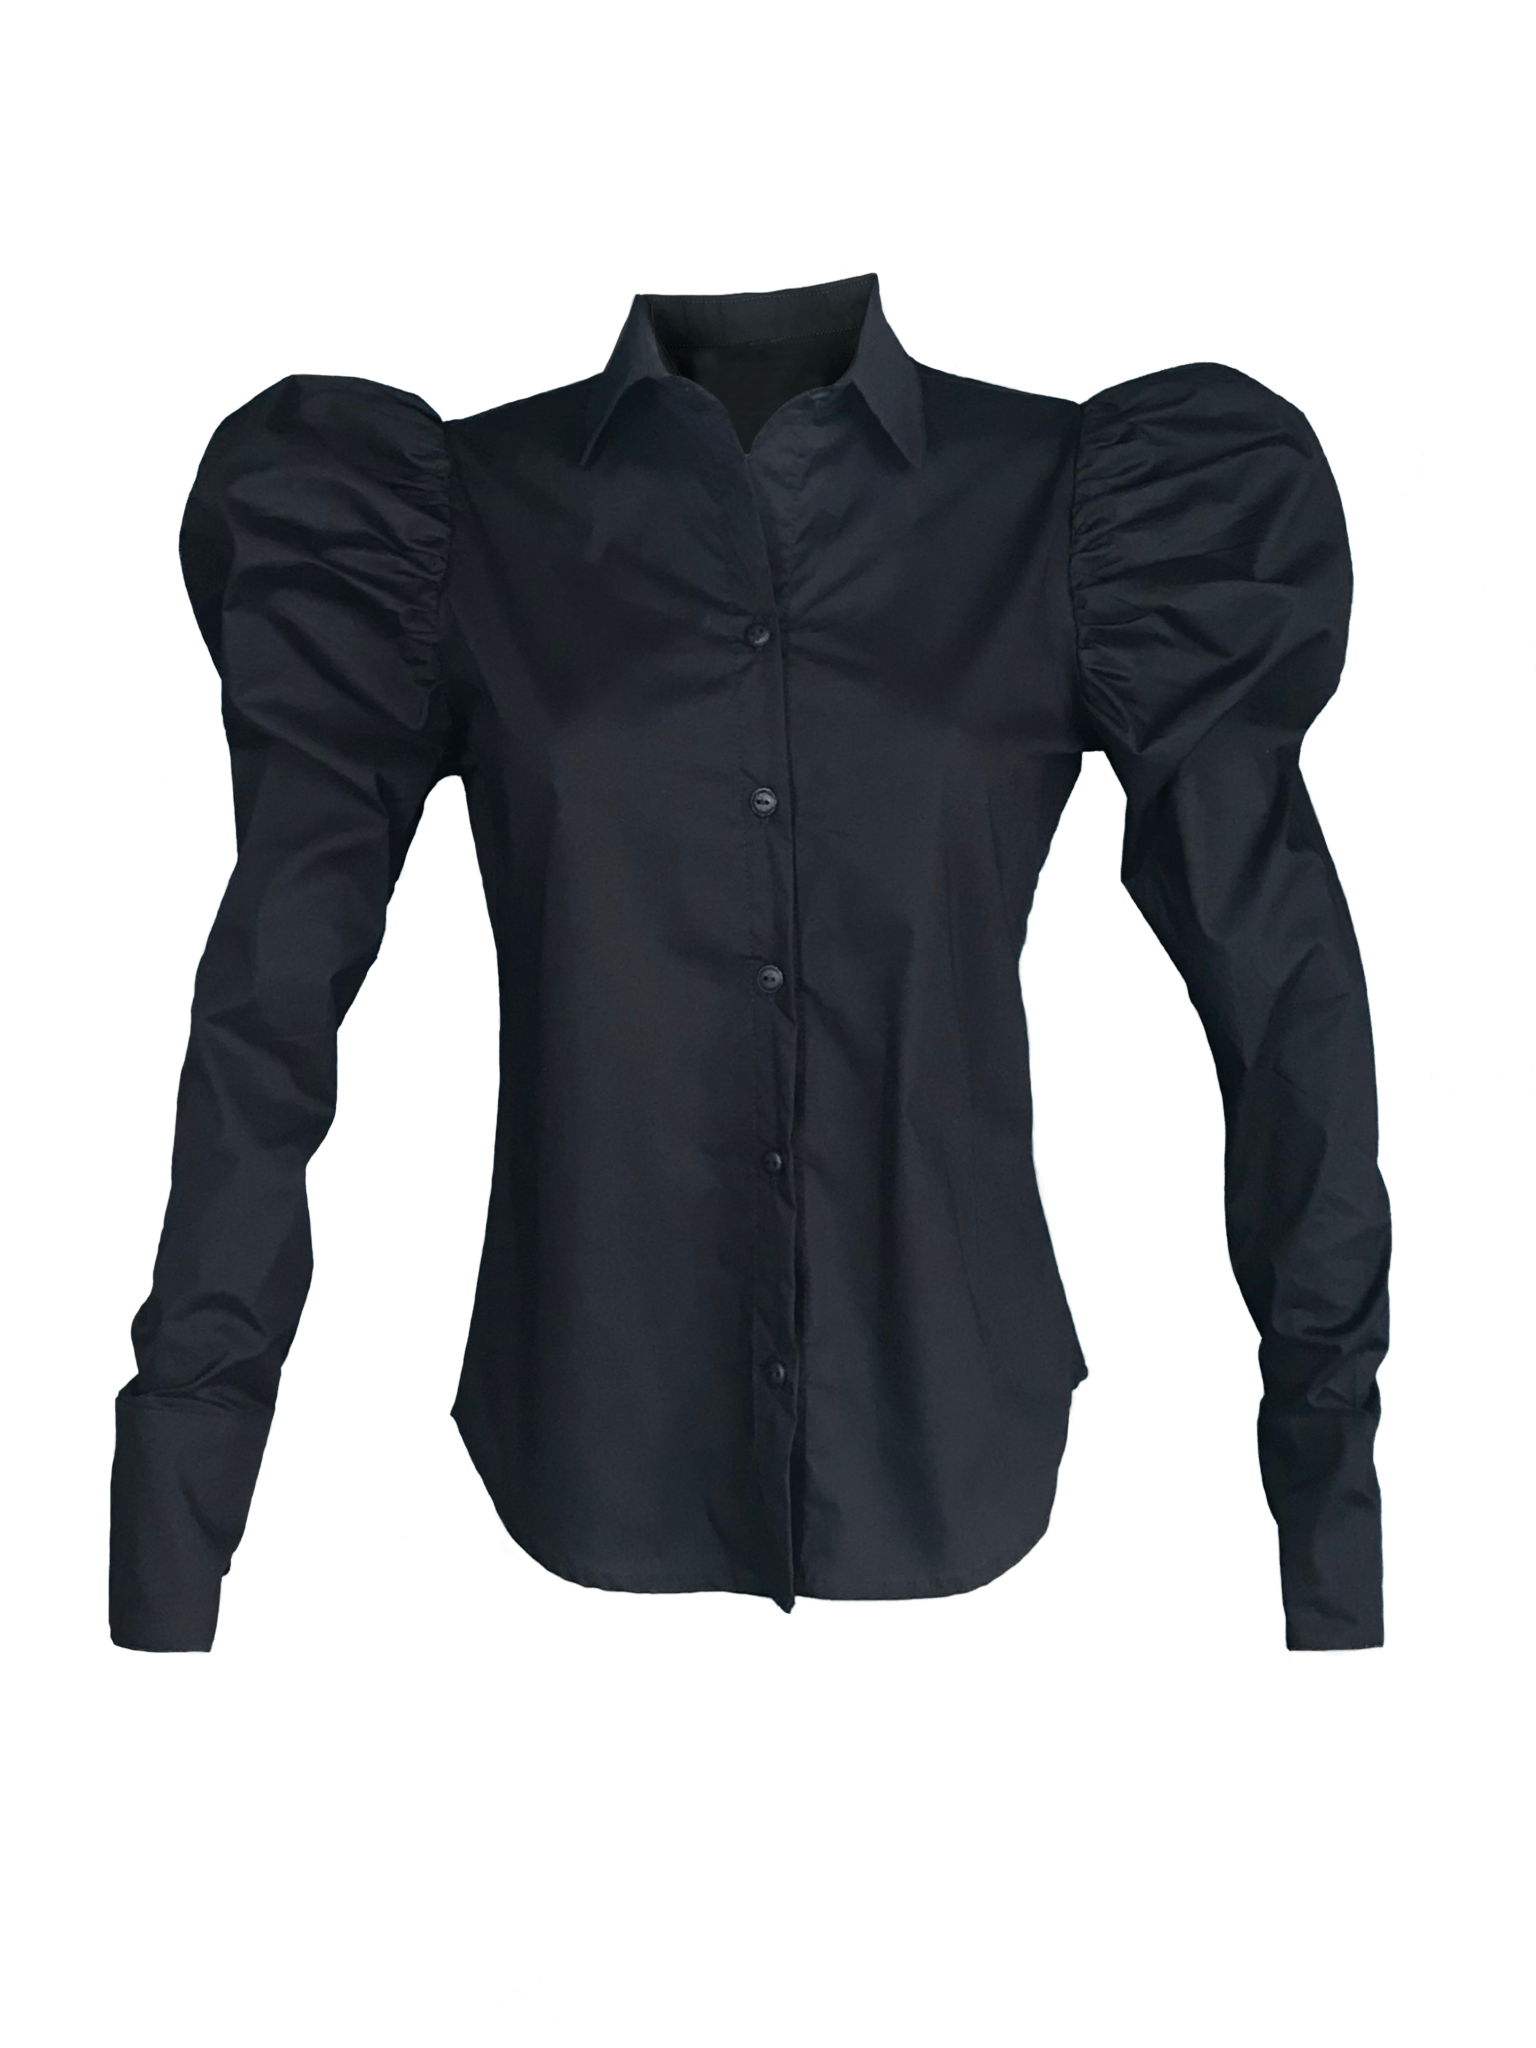 Camisa manga larga en color negro.